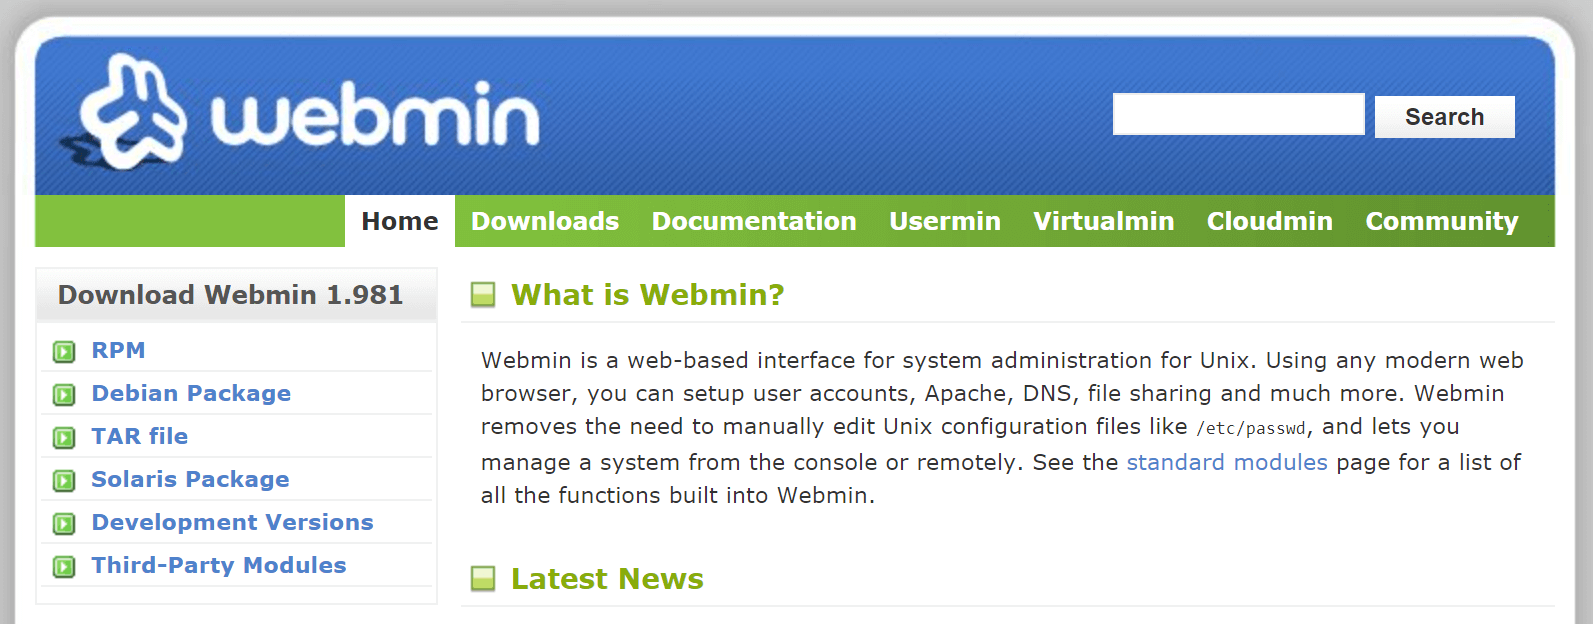 webmin-主页